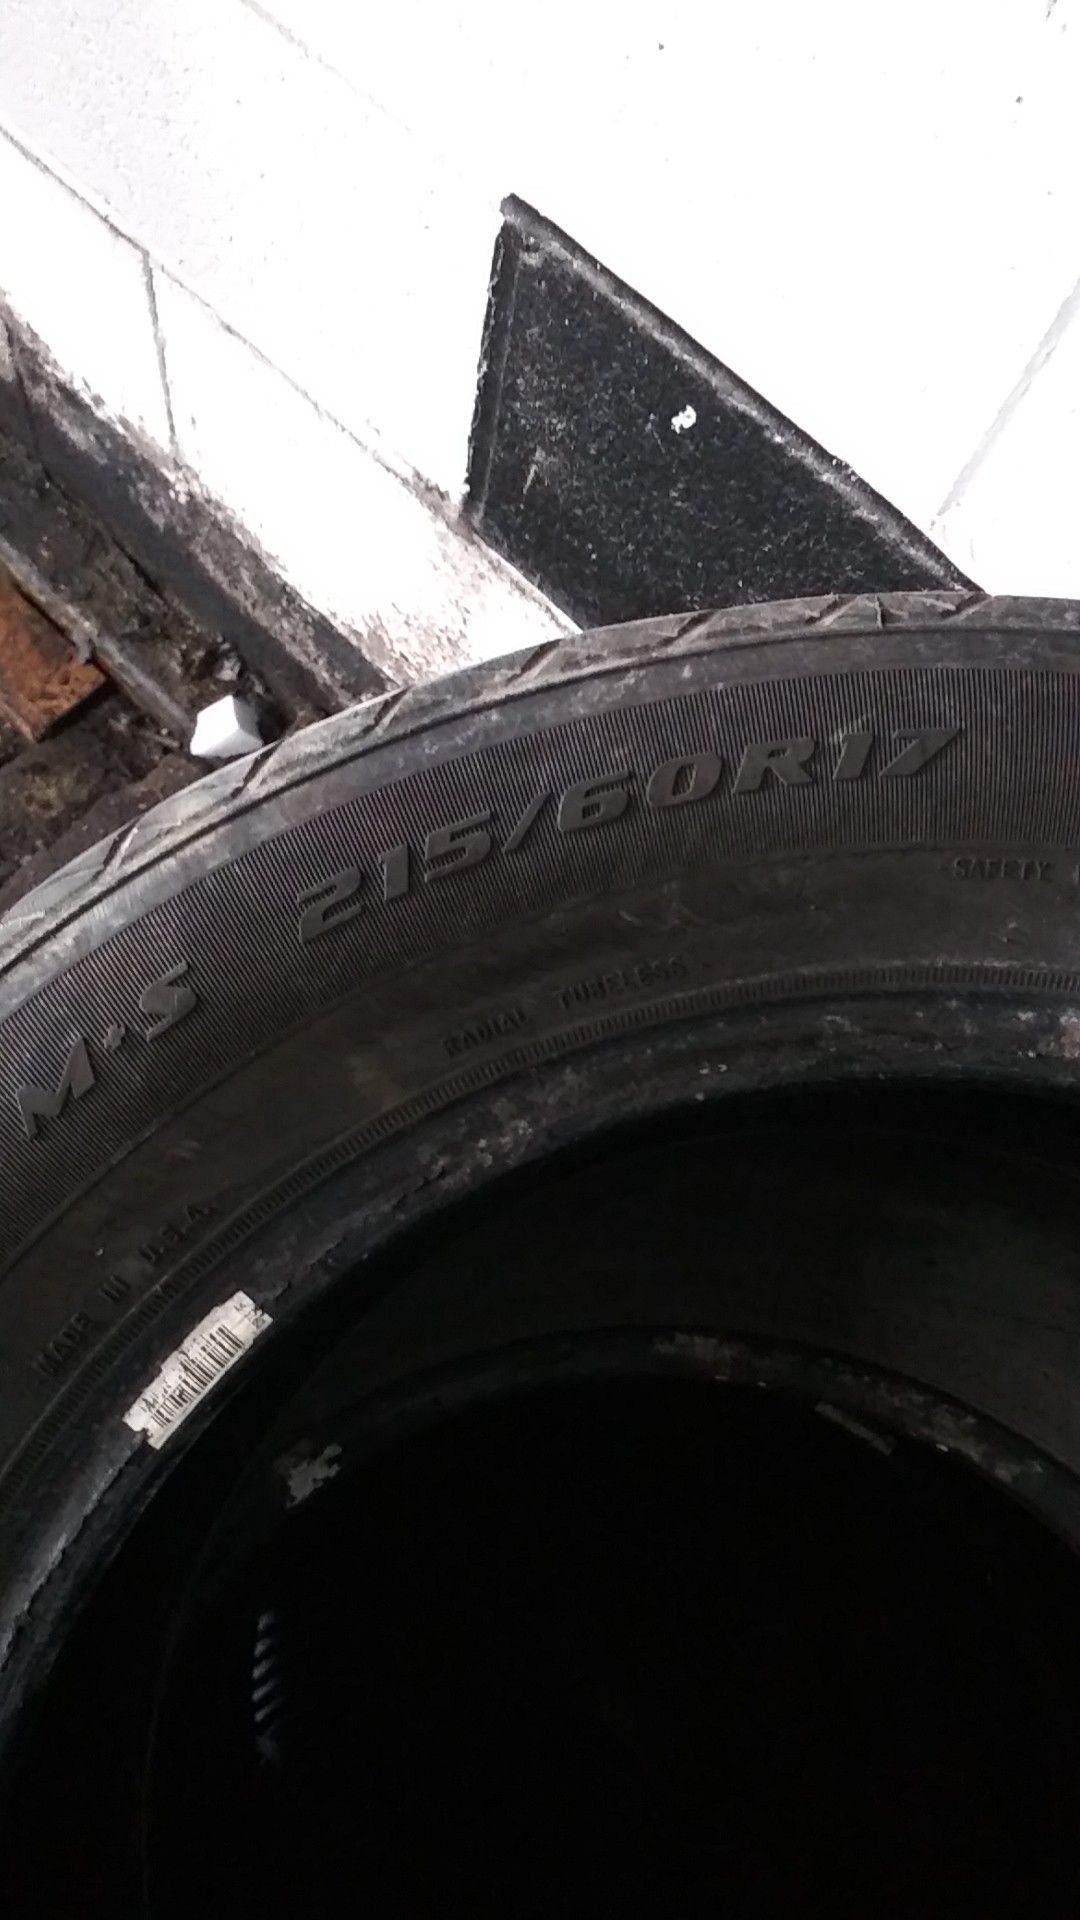 215/60/17 inch tire